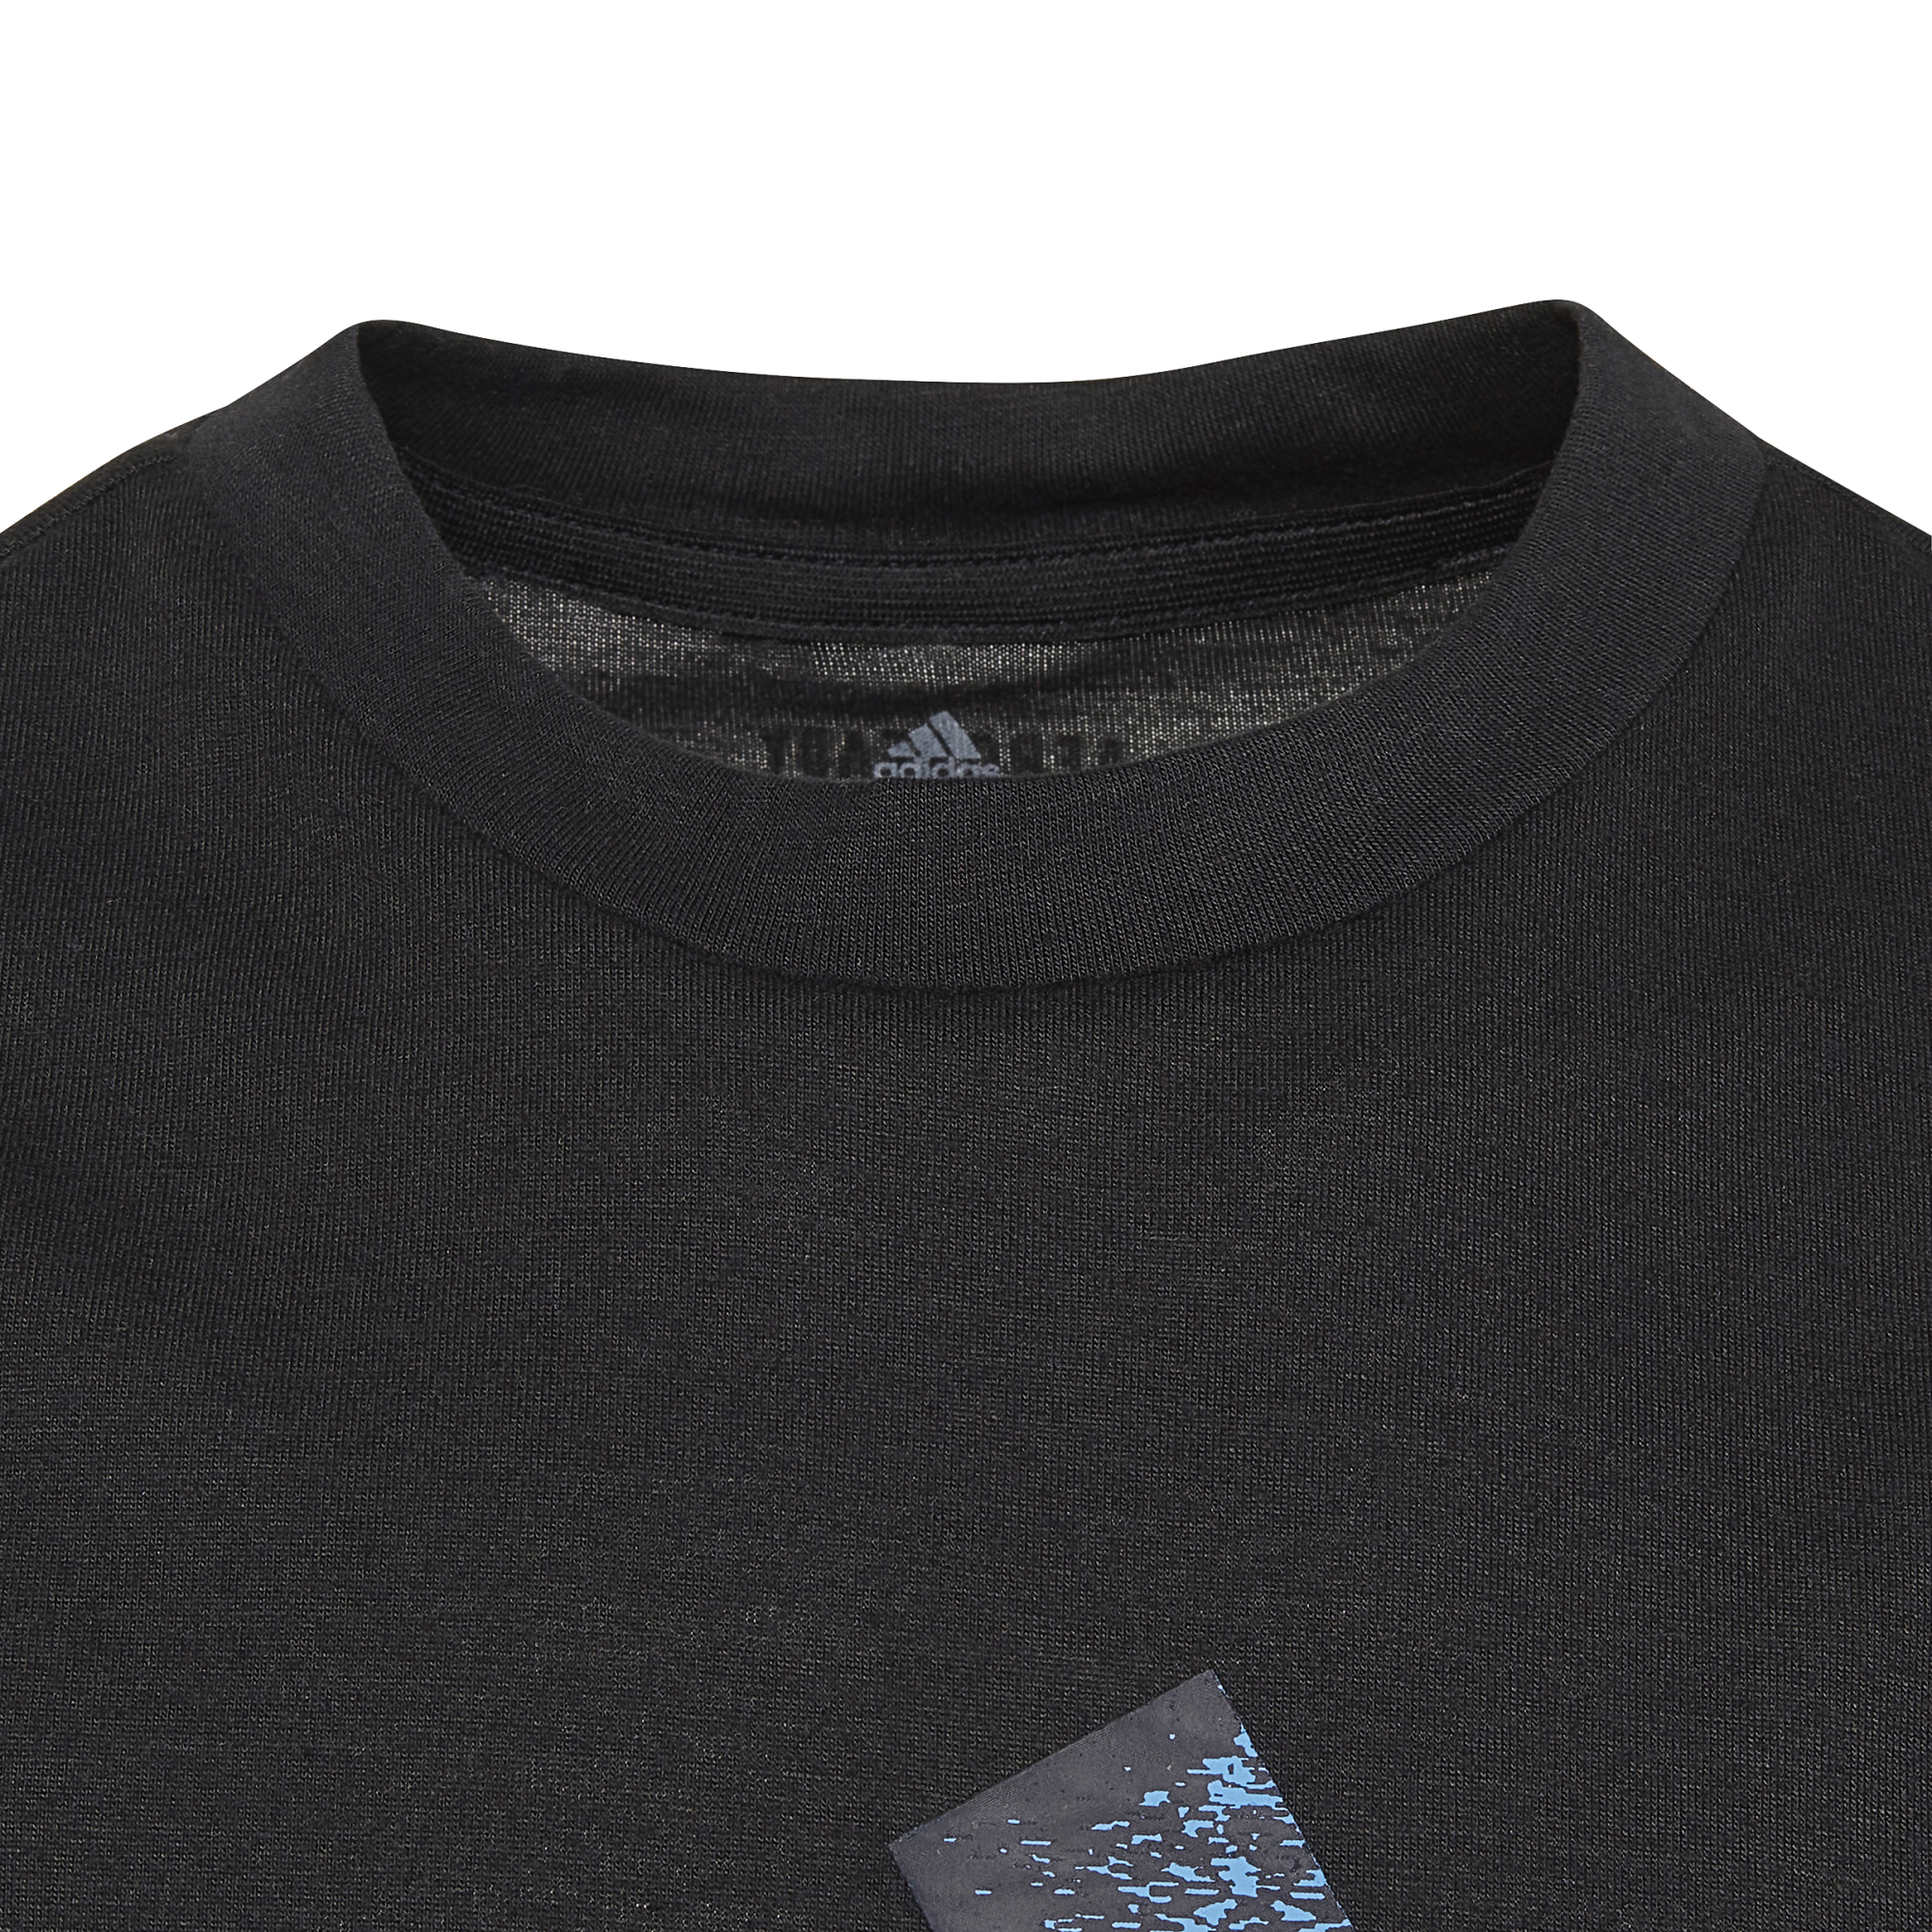 Aeroready Hiit Prime T-Shirt (GS)